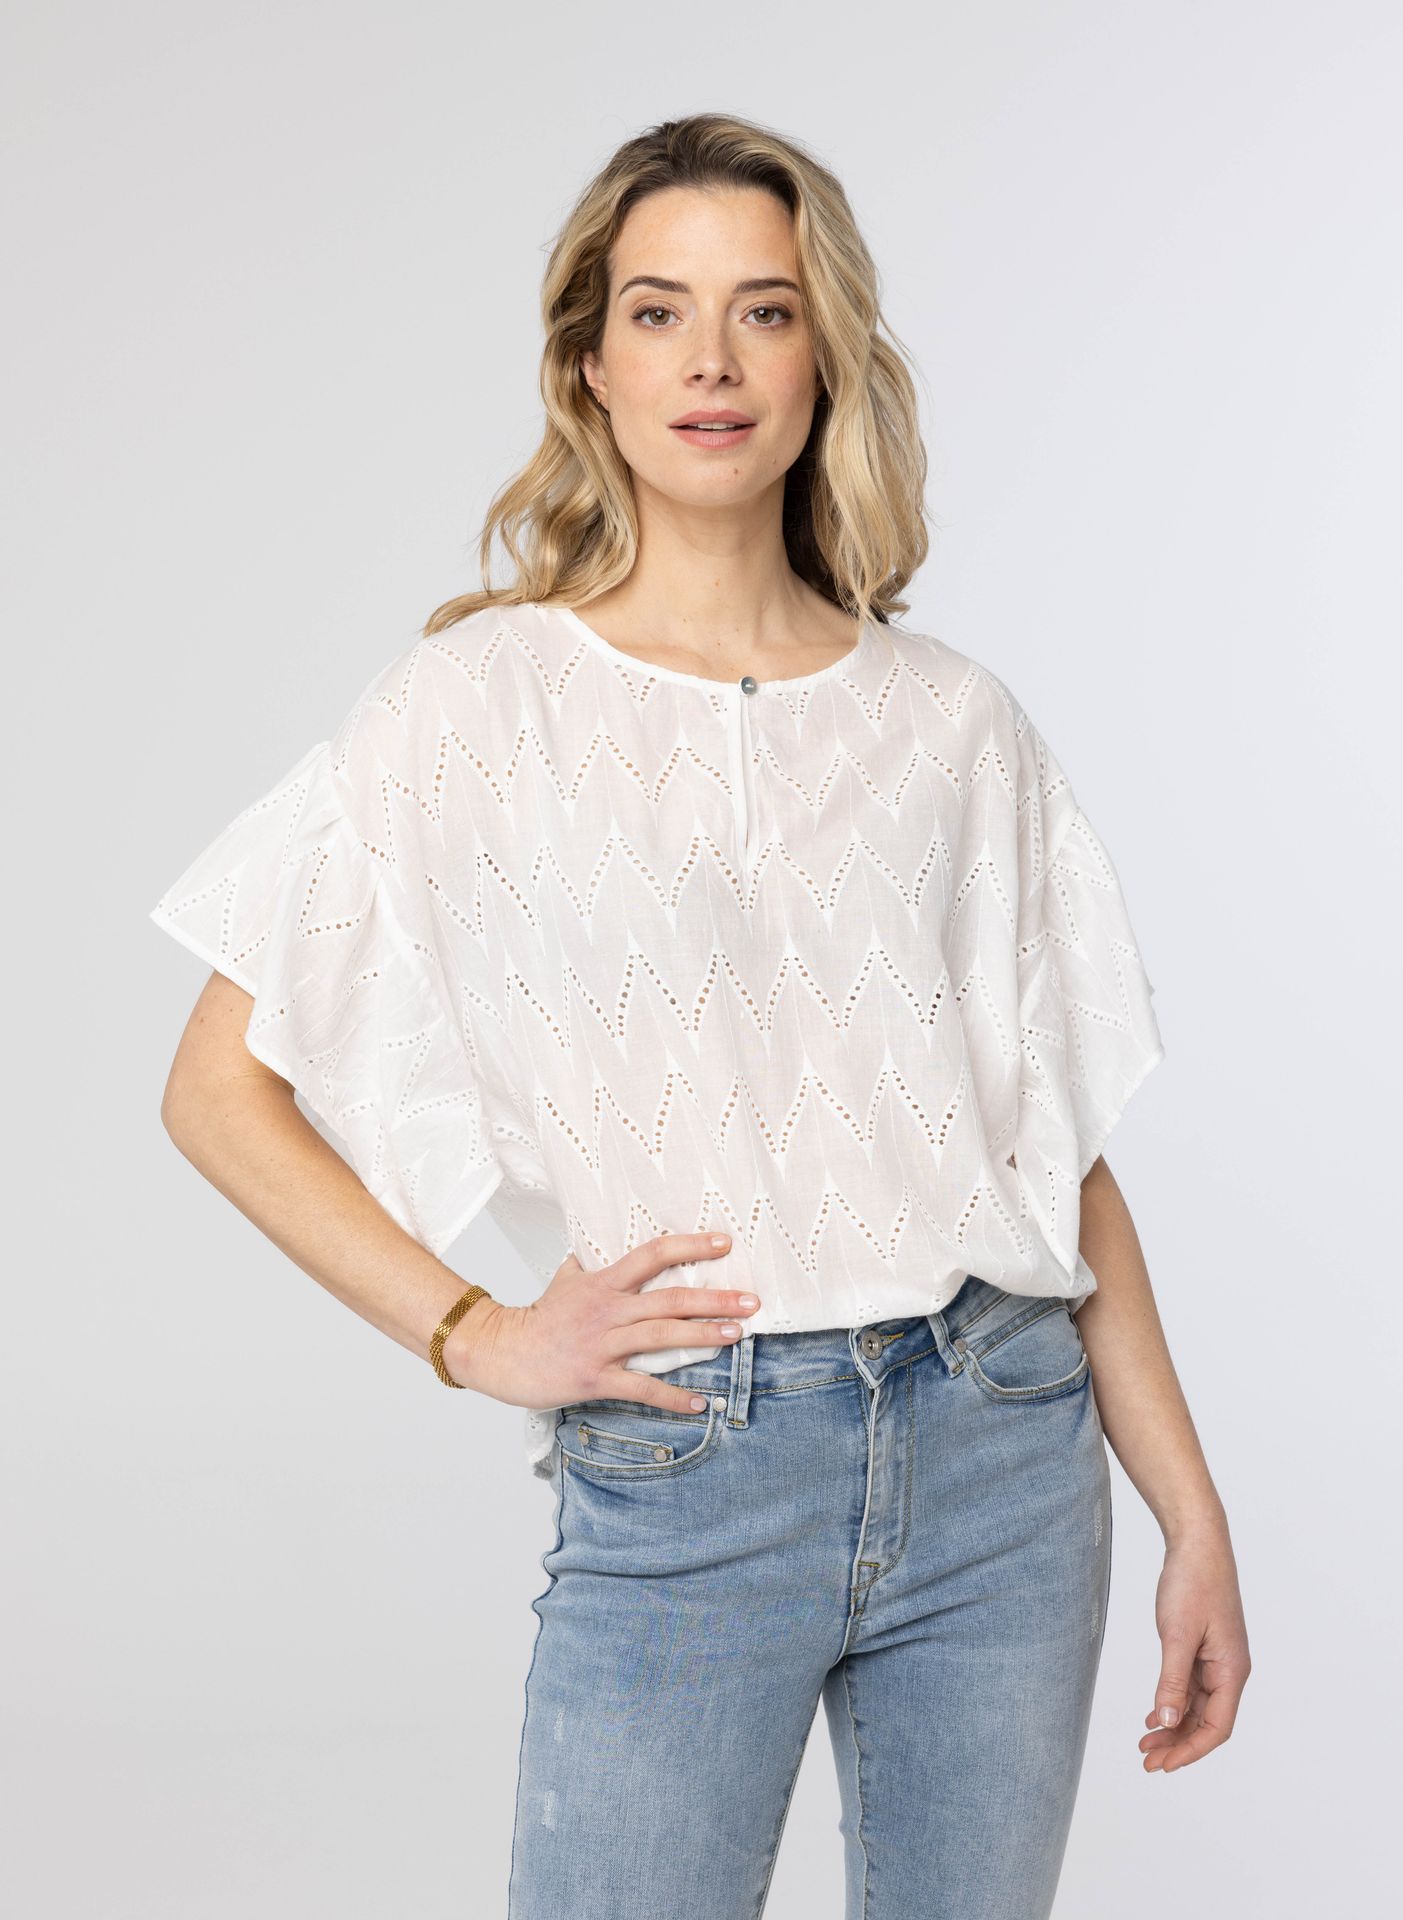 Norah Off white blouse off-white 213981-101